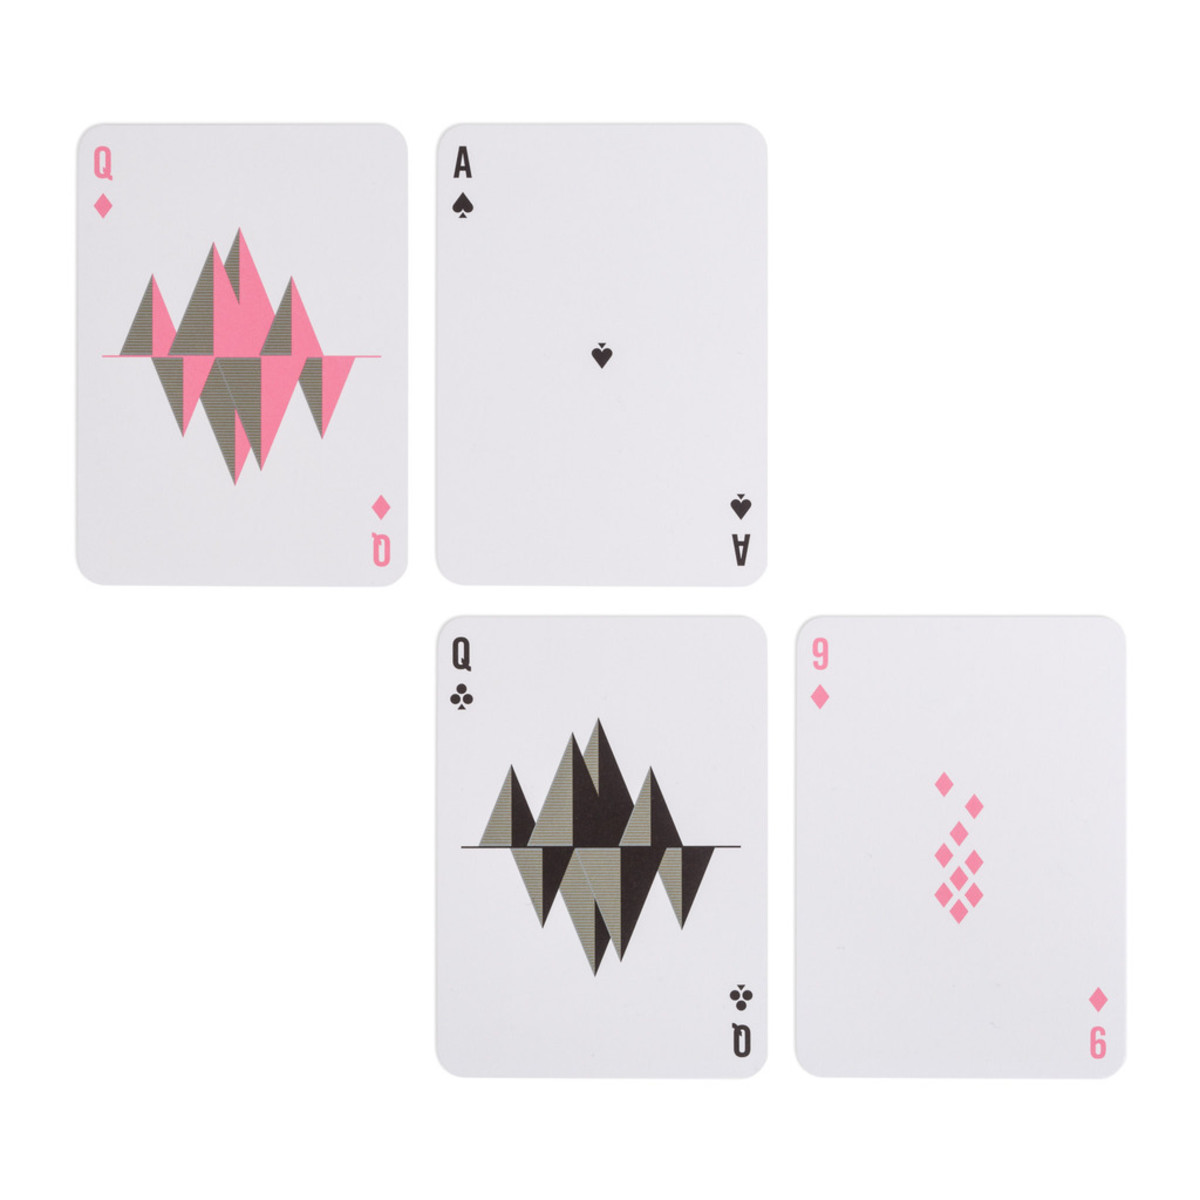 Rapha Playing Cards